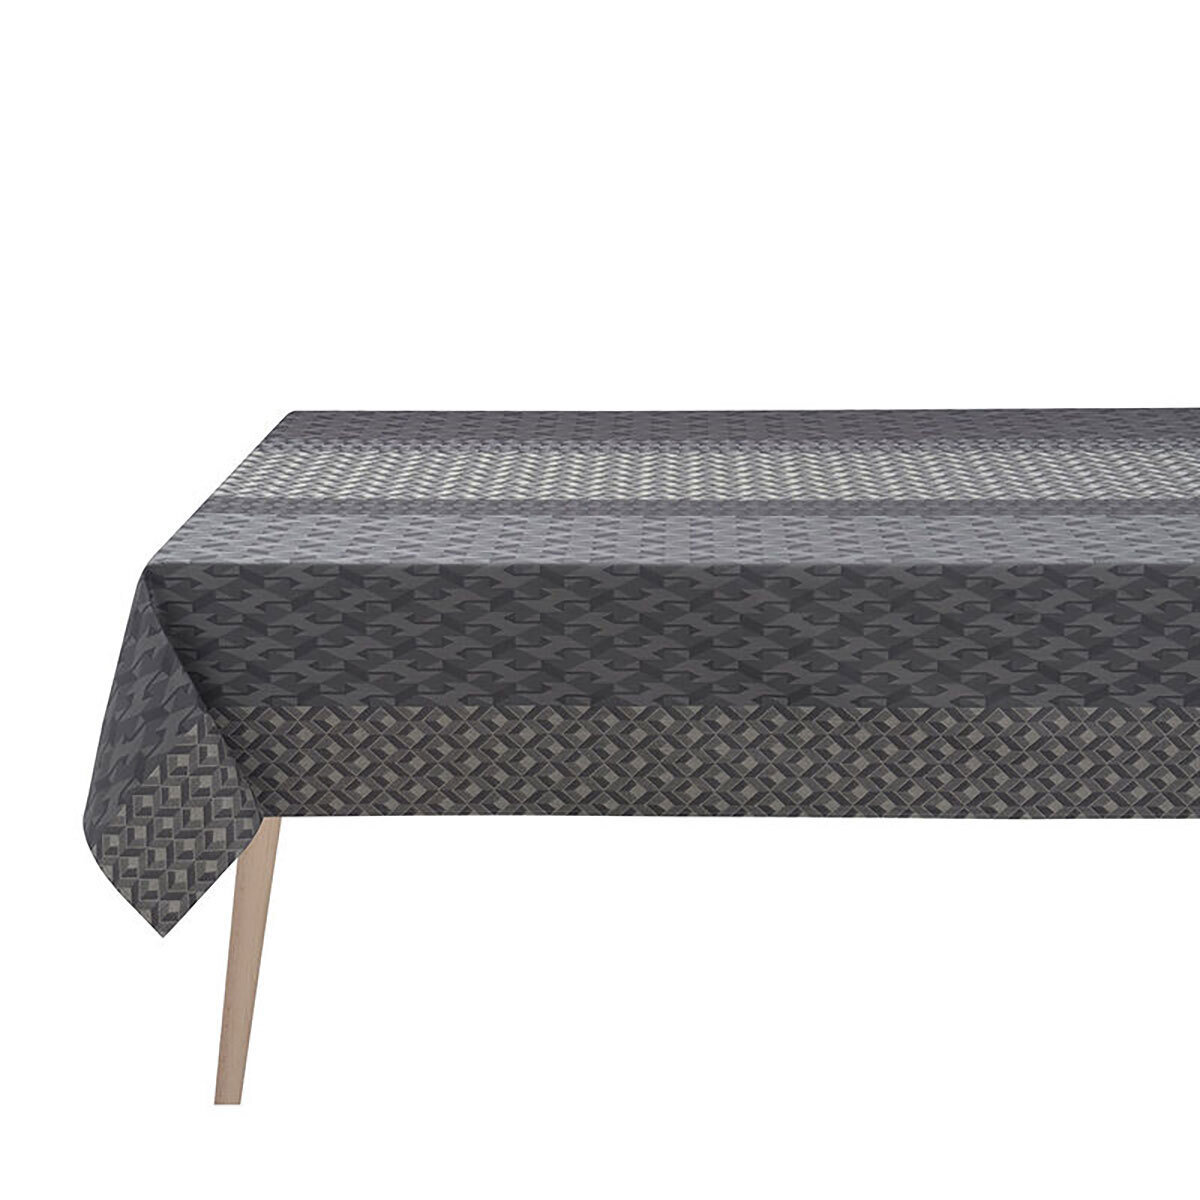 Le Jacquard Francais Tablecloth Caractere Grey 100% Coated Cotton 69 x 98 Inch 28212